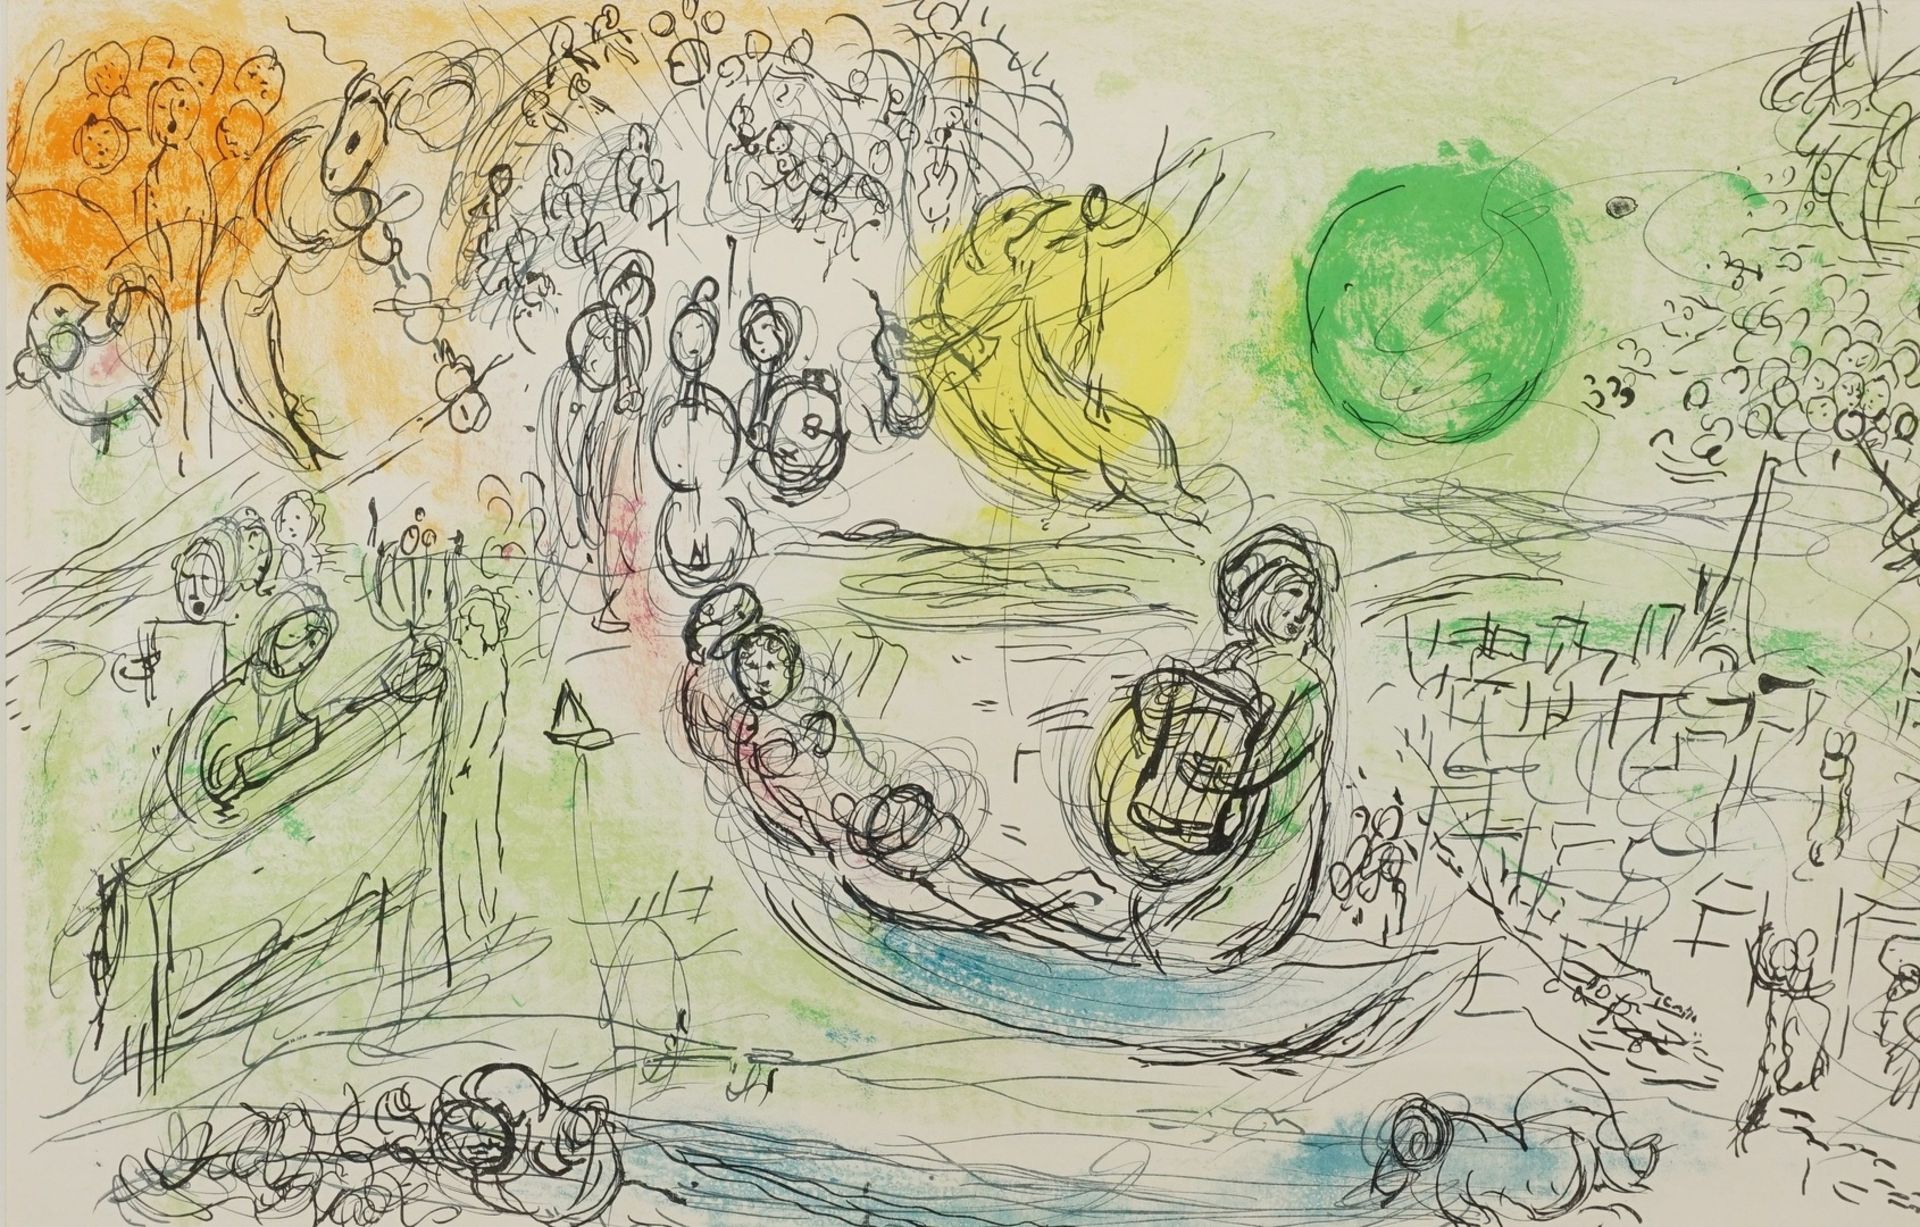 Marc Chagall, "Le Concert" (Das Konzert)